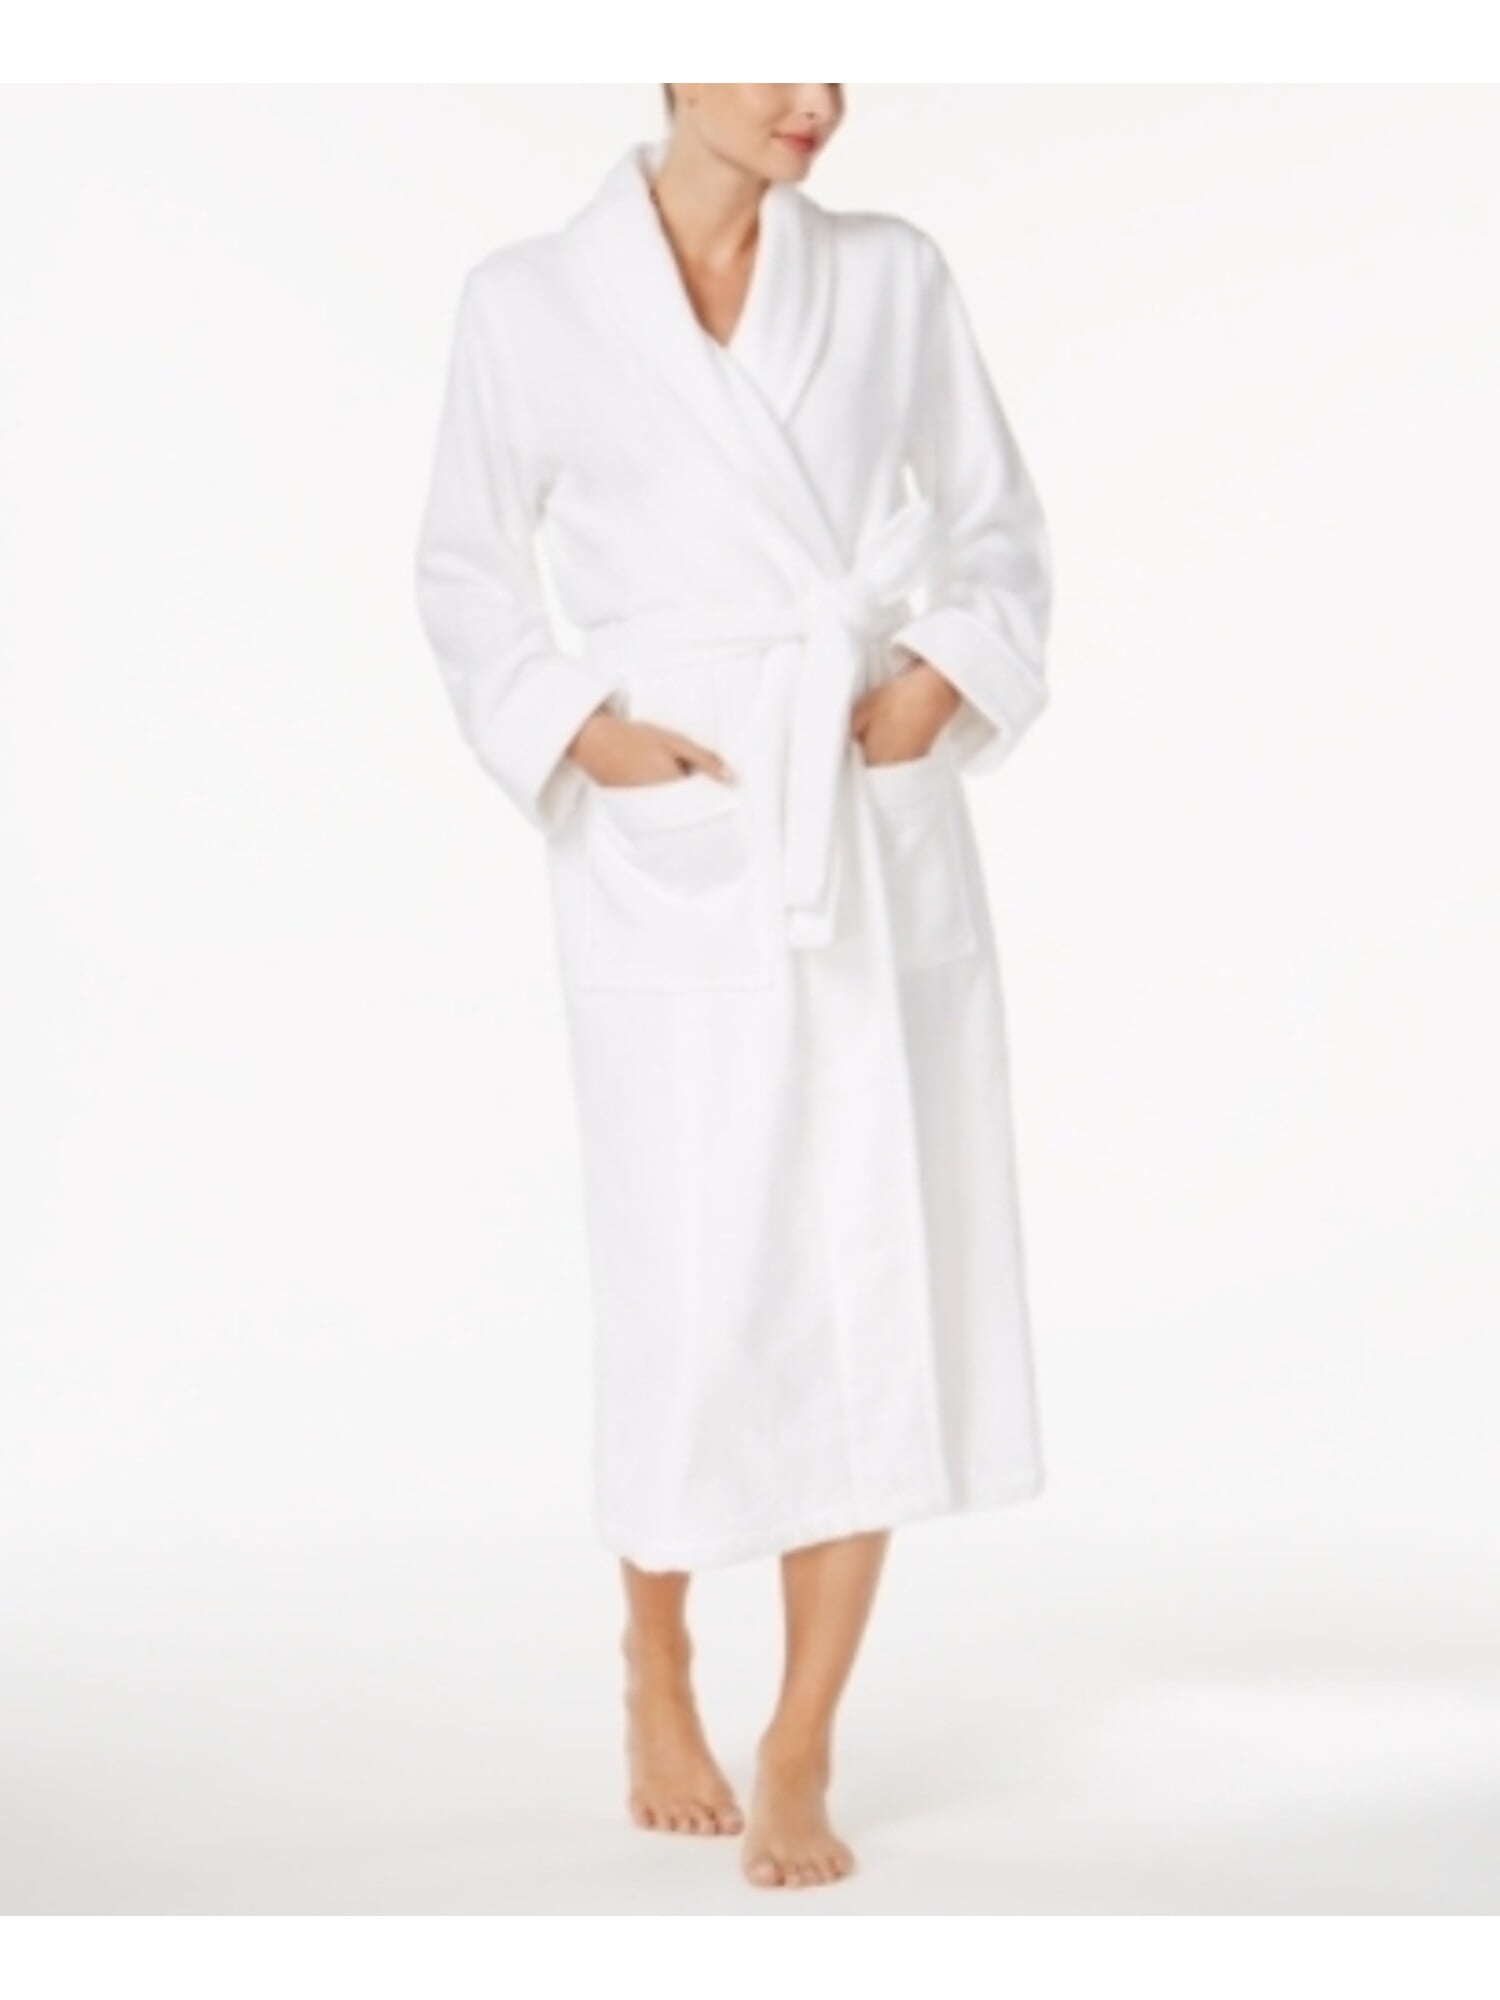 CHARTER CLUB Intimates White Sleepwear Robe Size: L 